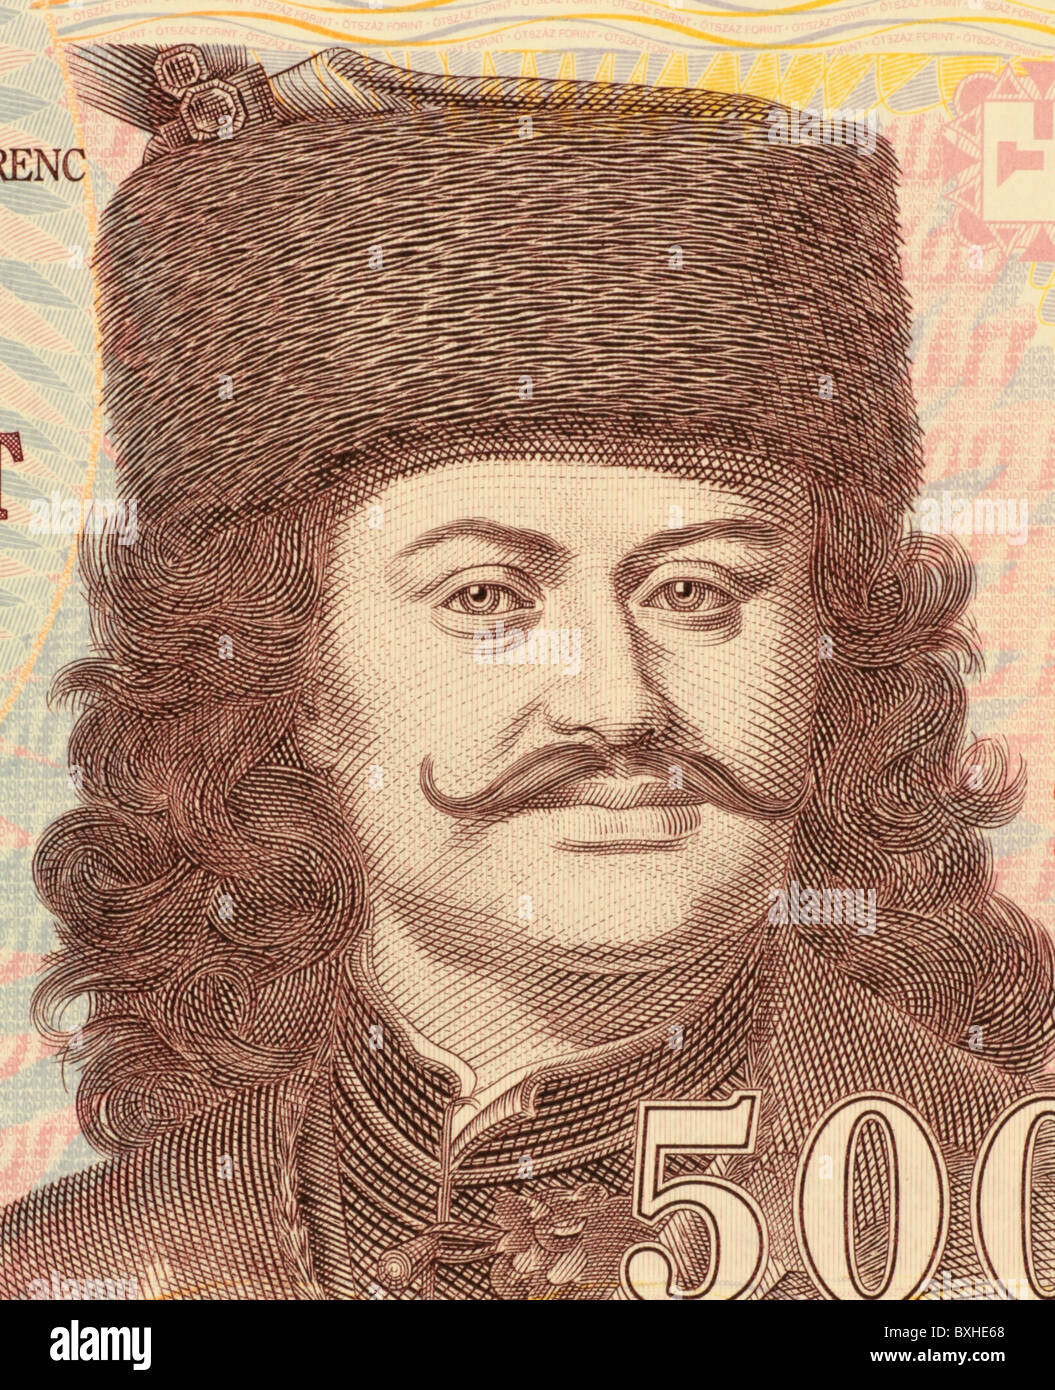 Francis II Rakoczi (1676-1735) on 500 Forint 2008 Banknote from Hungray. National hero of Hungary. Stock Photo